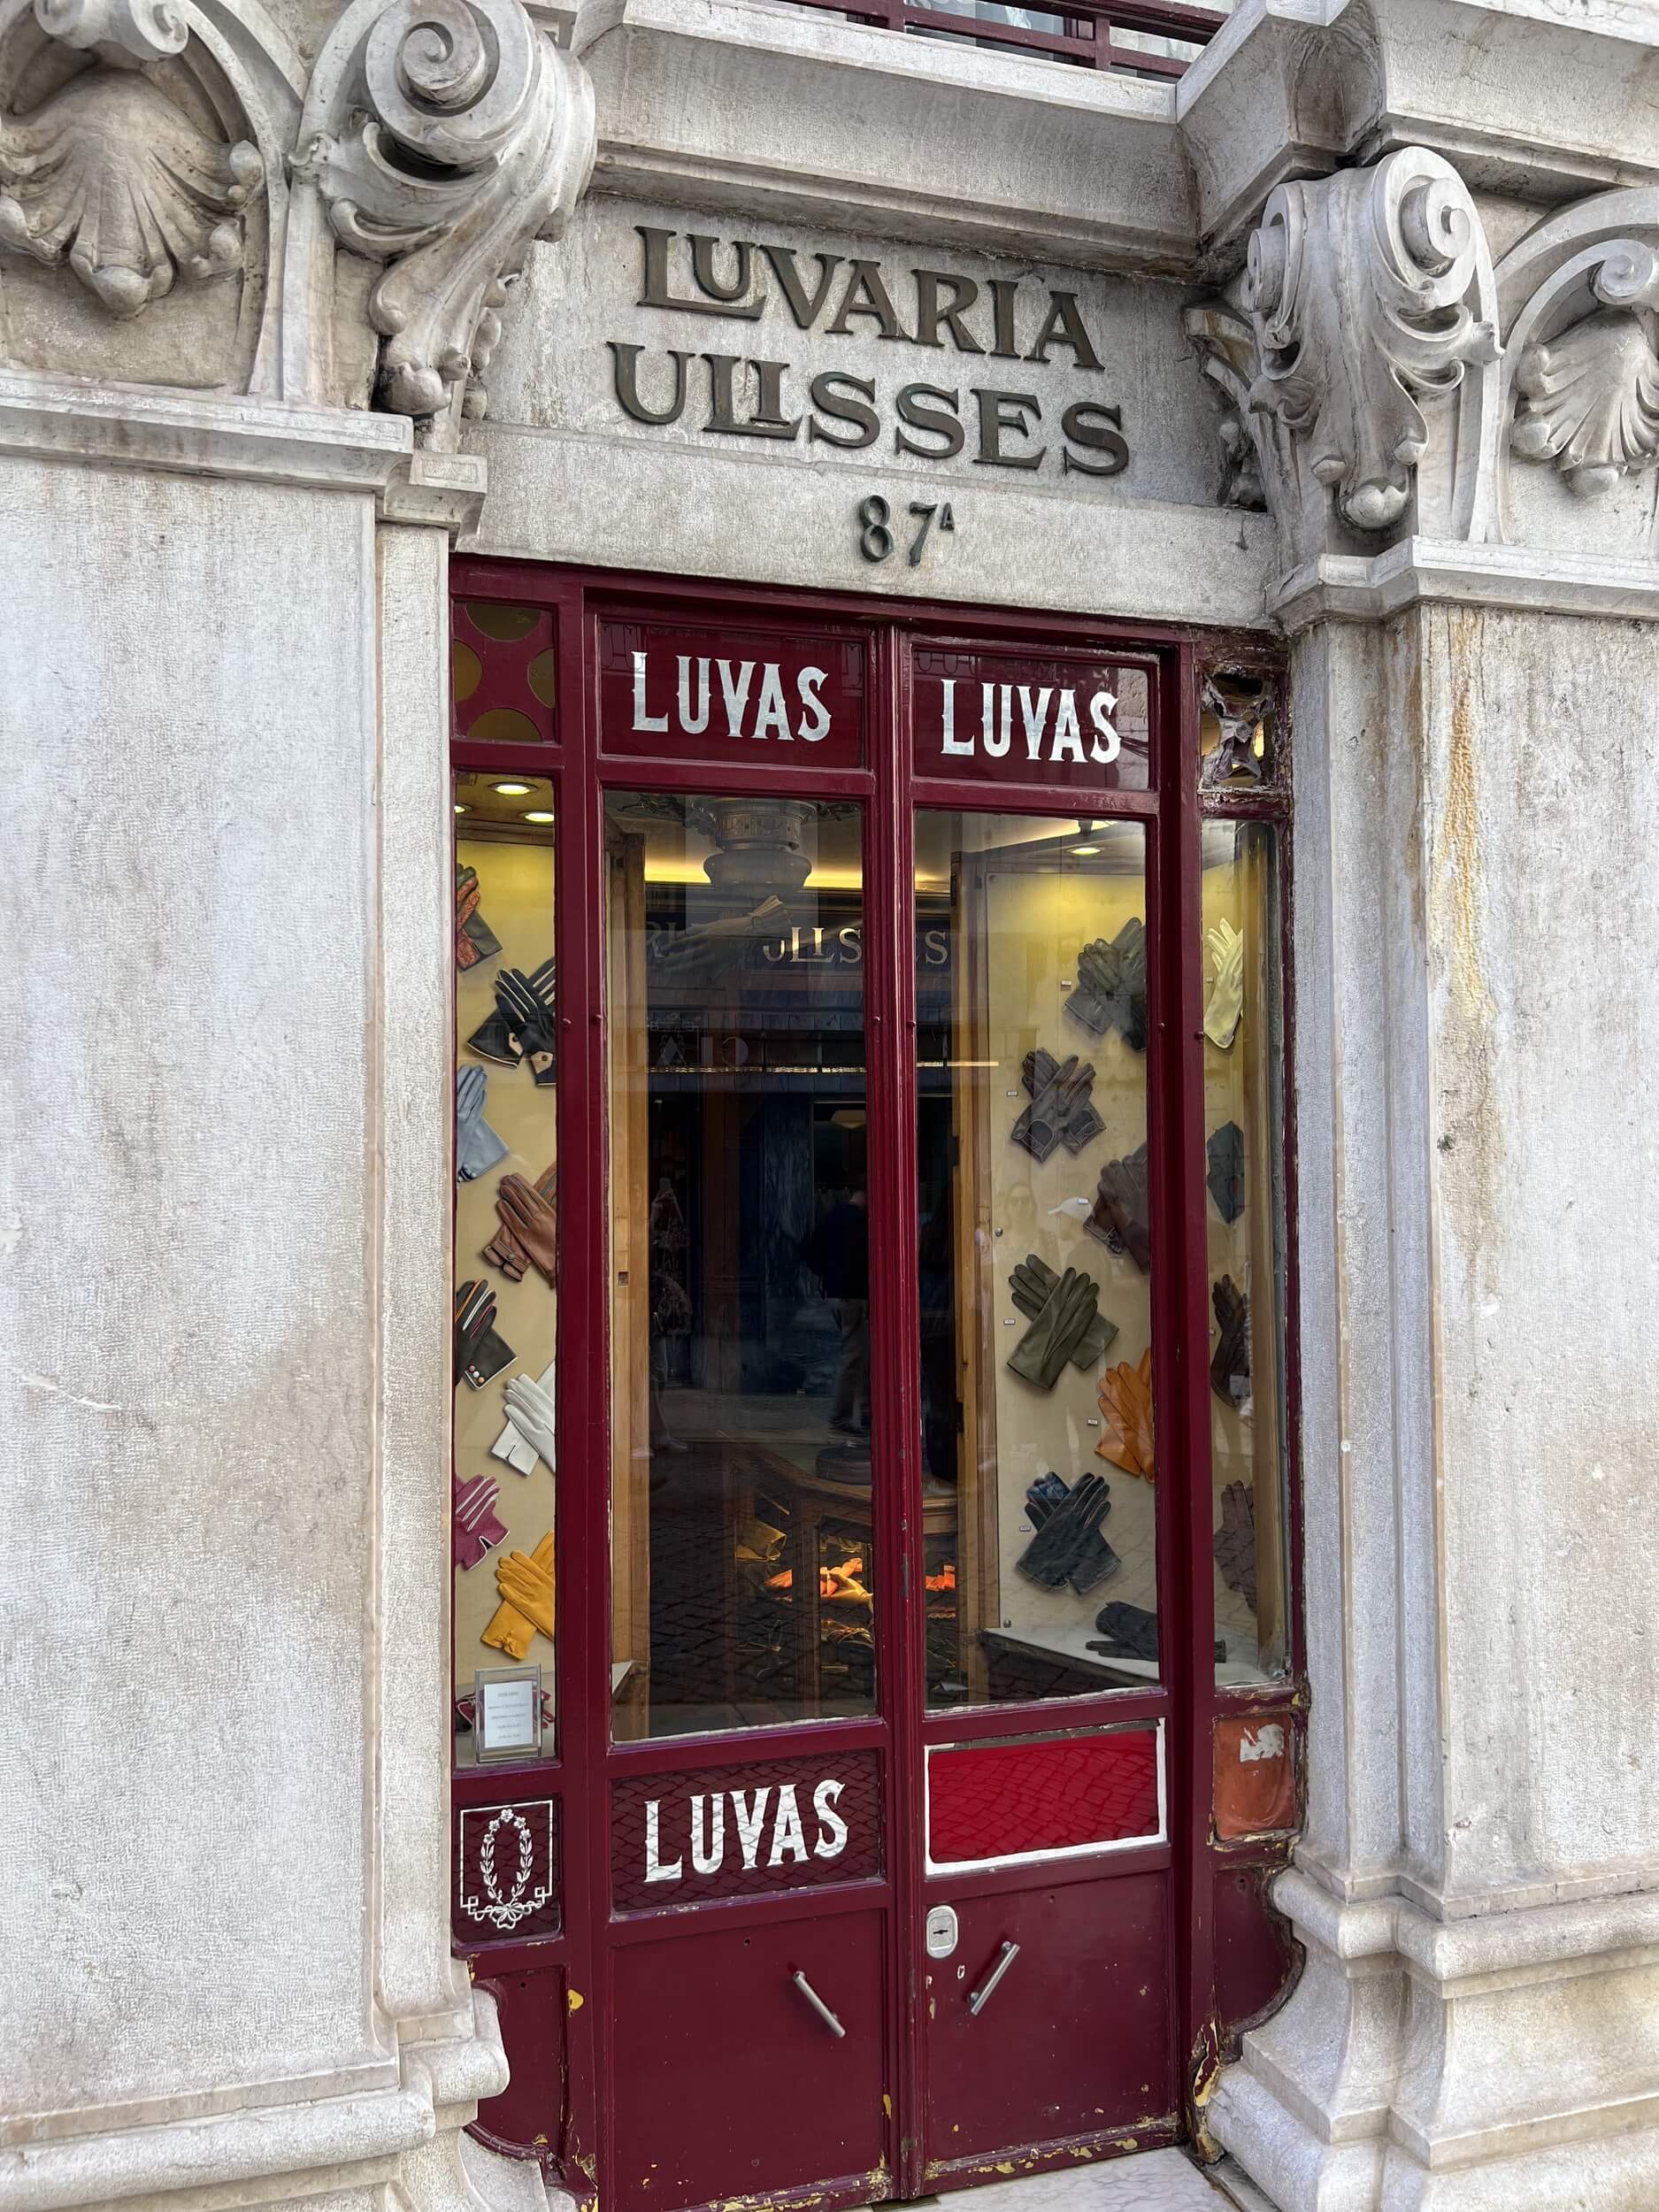 Luvaria Ulisses Entrance